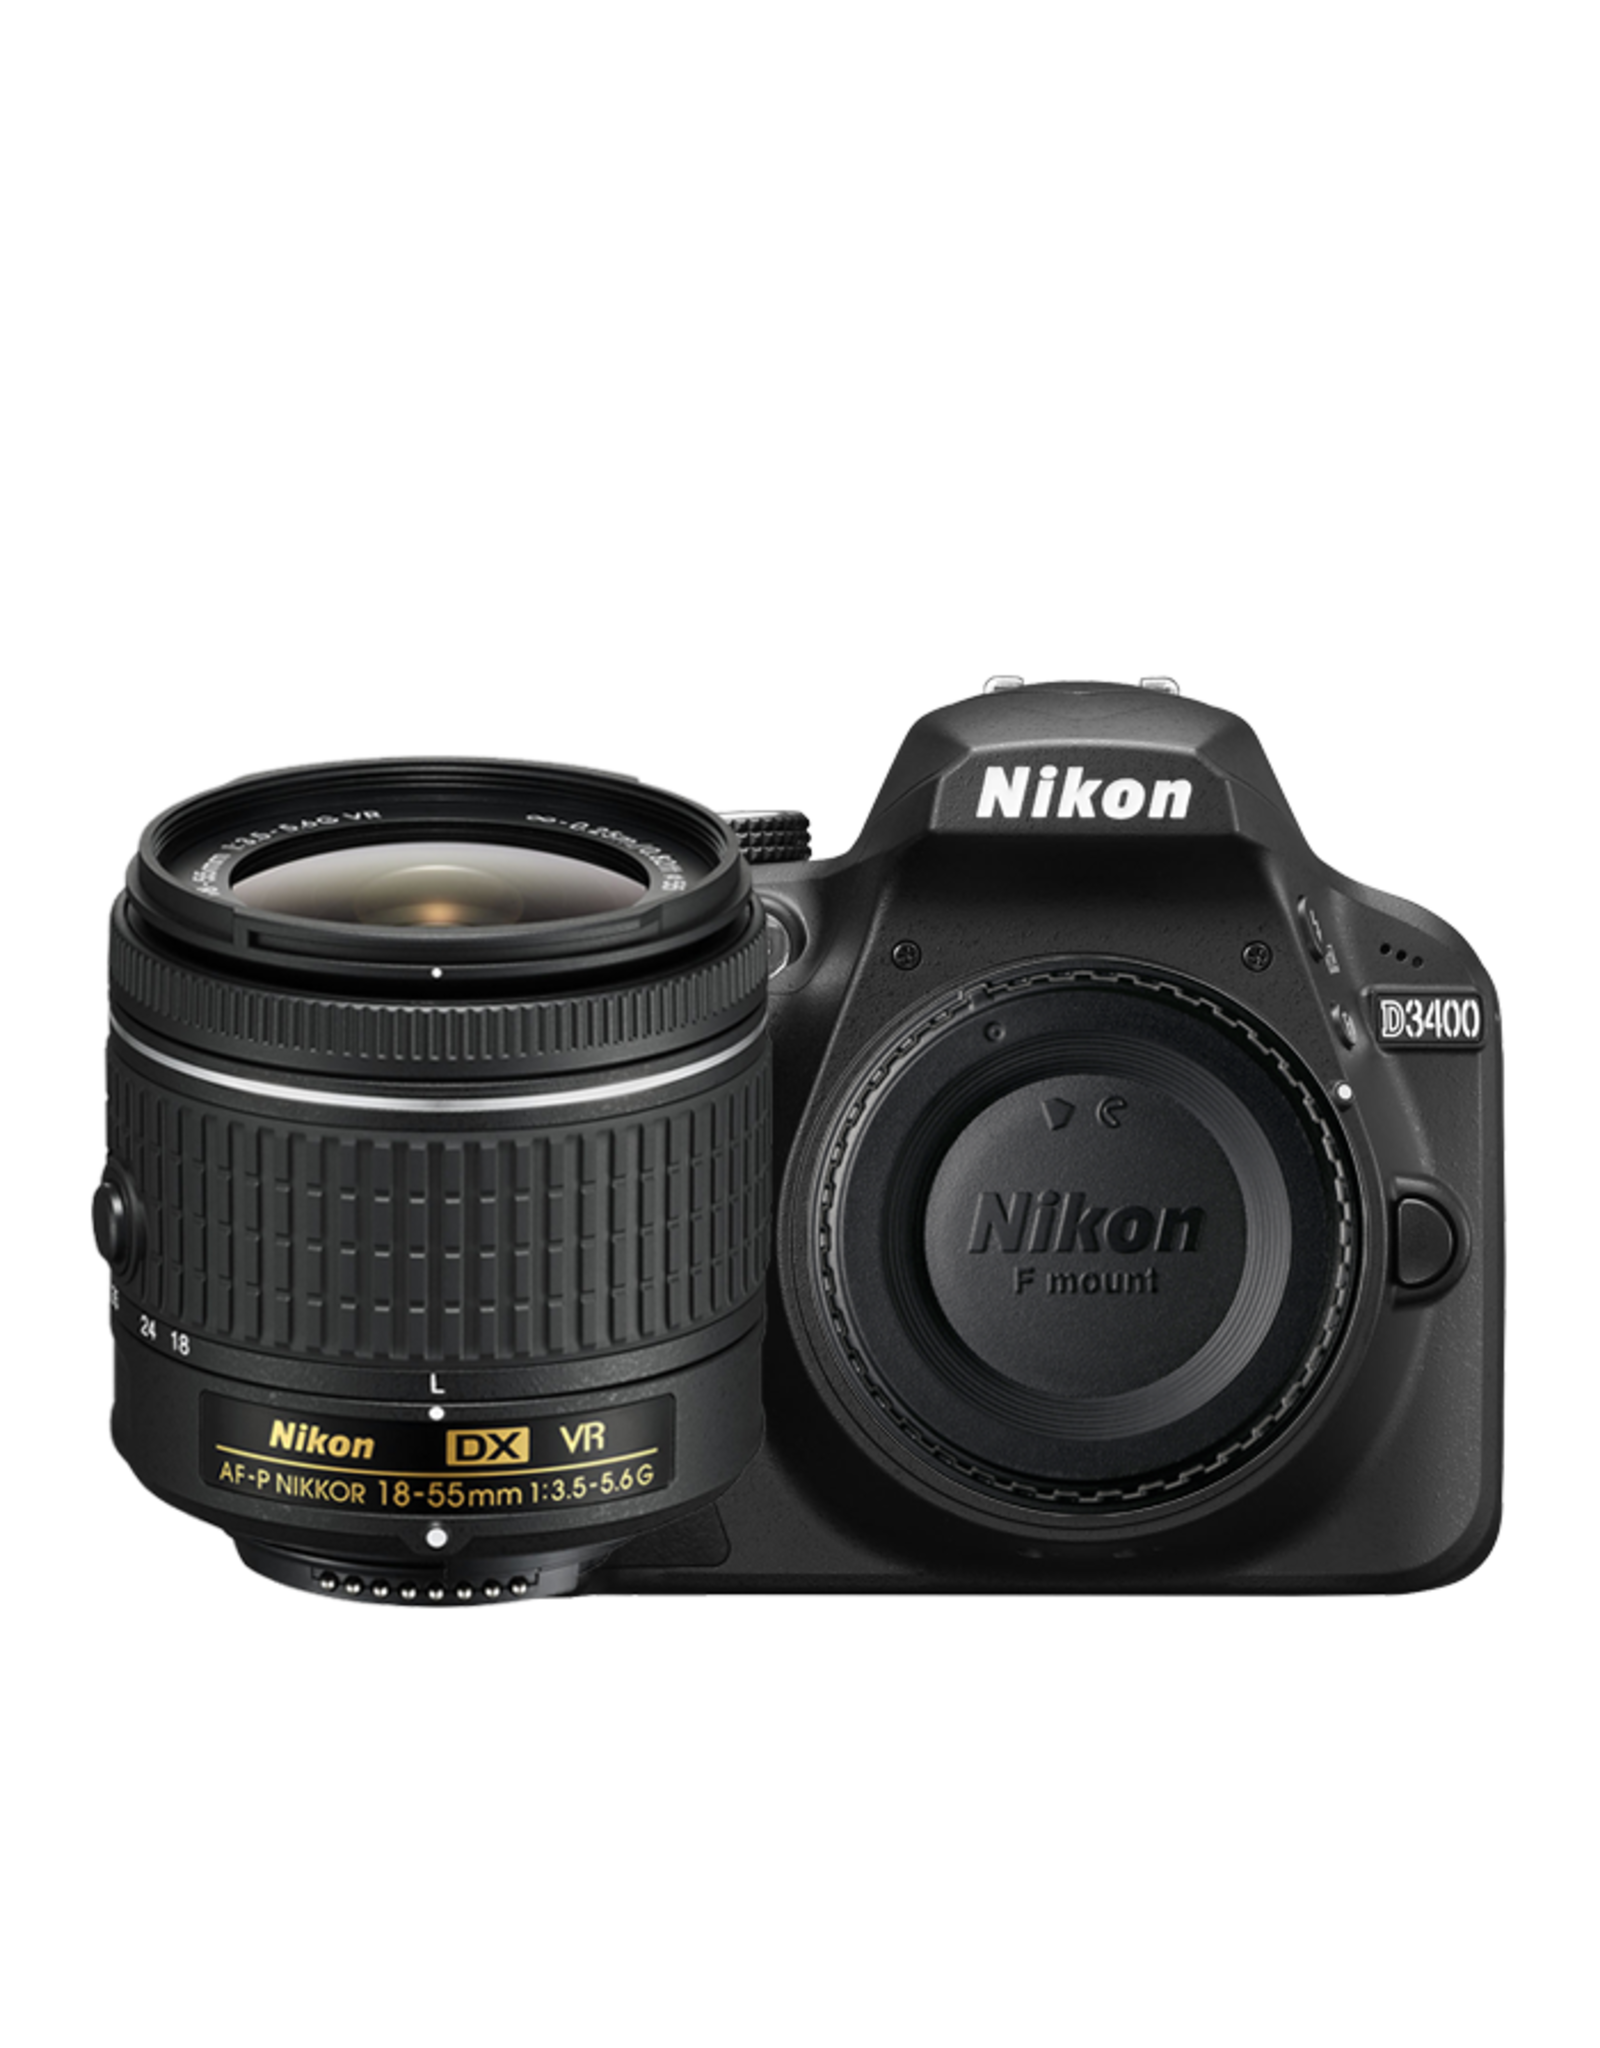 Nikon Nikon D3400 with 18-55mm lens